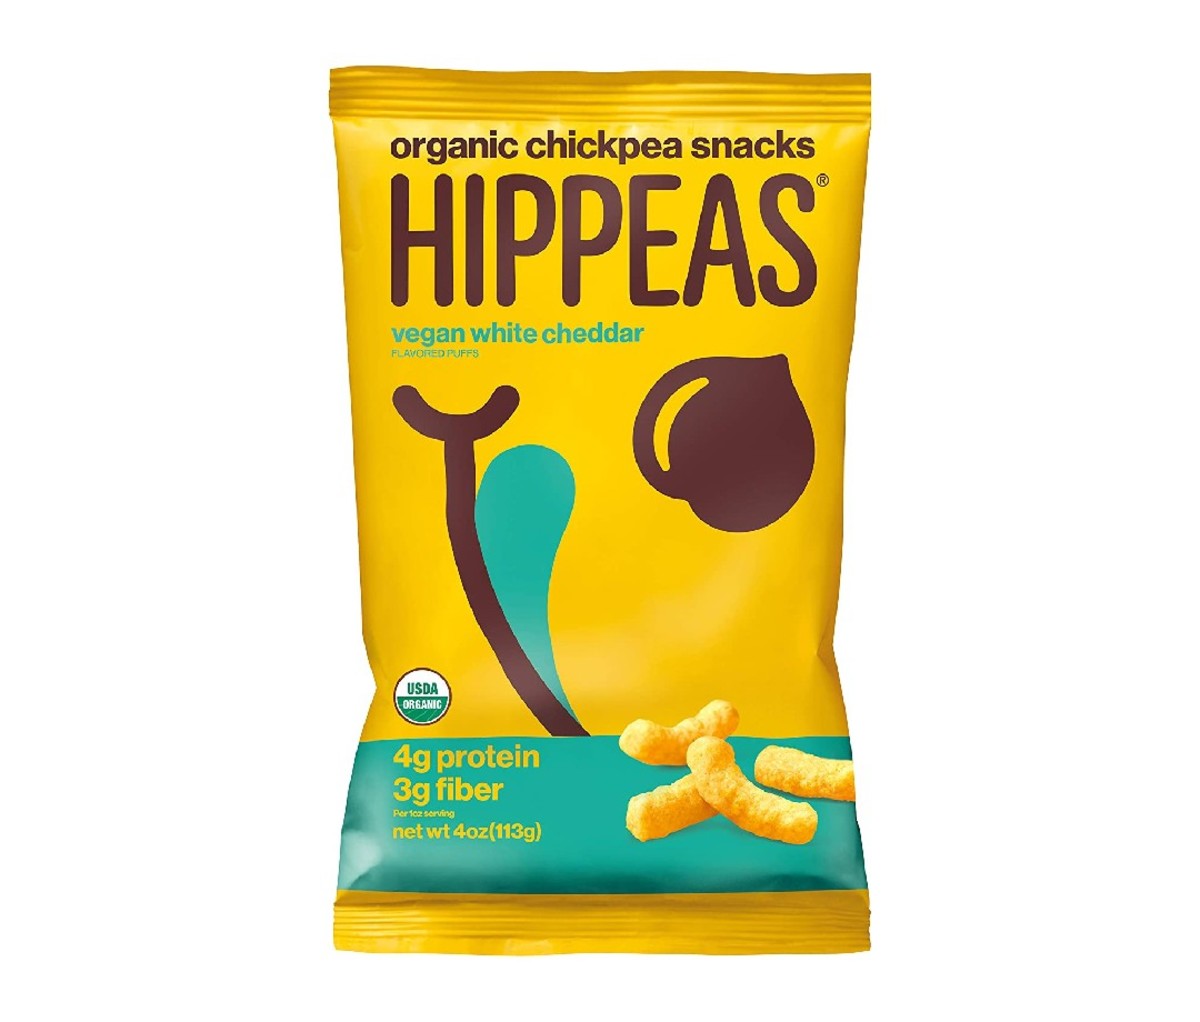 Hippeas soufflés with vegan white cheddar